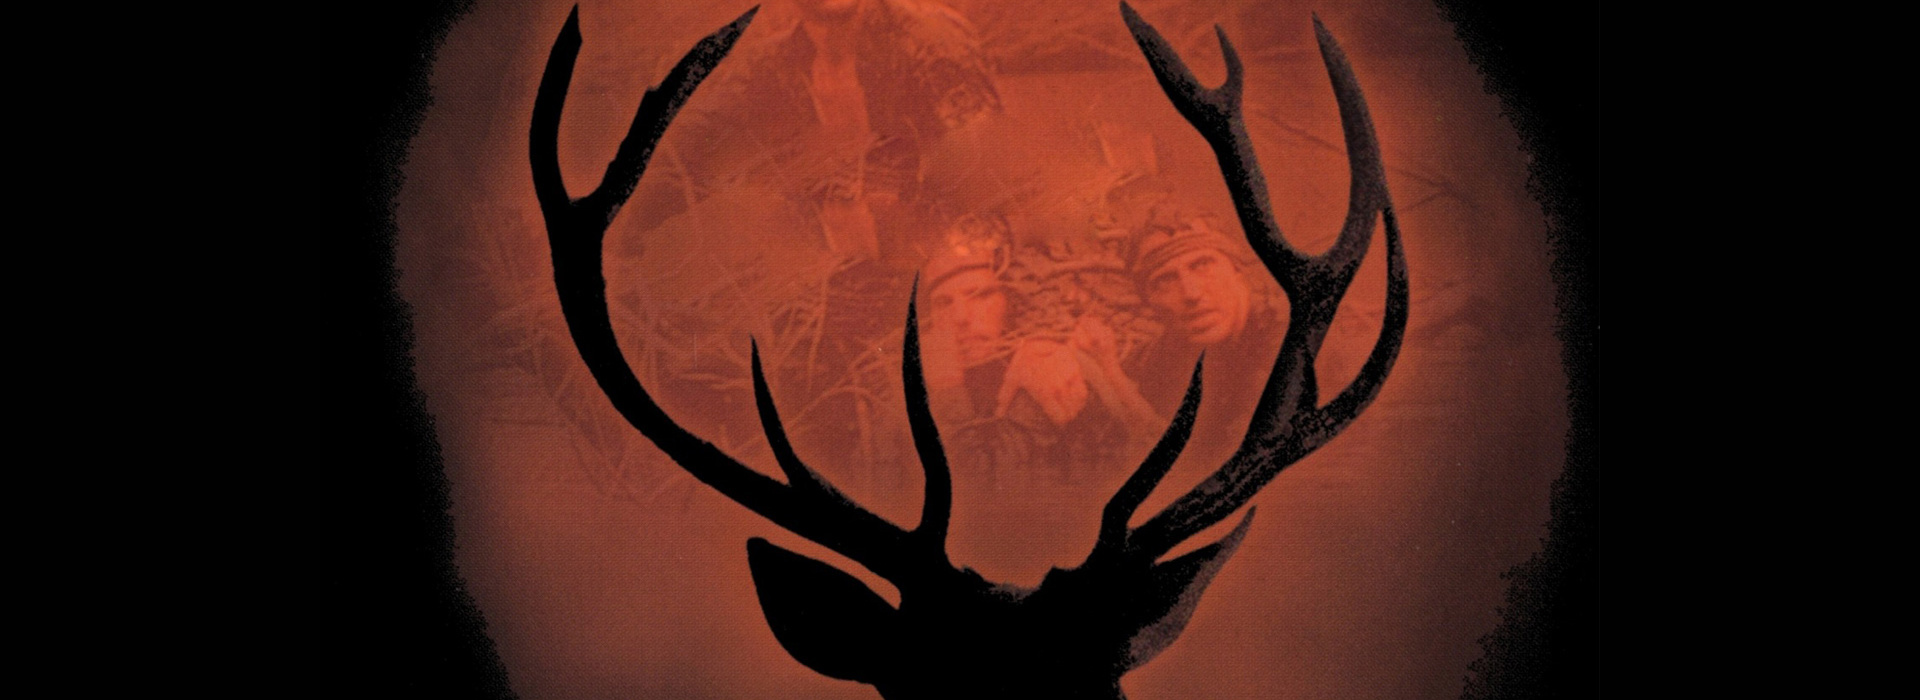 Movie poster The Deer Hunter